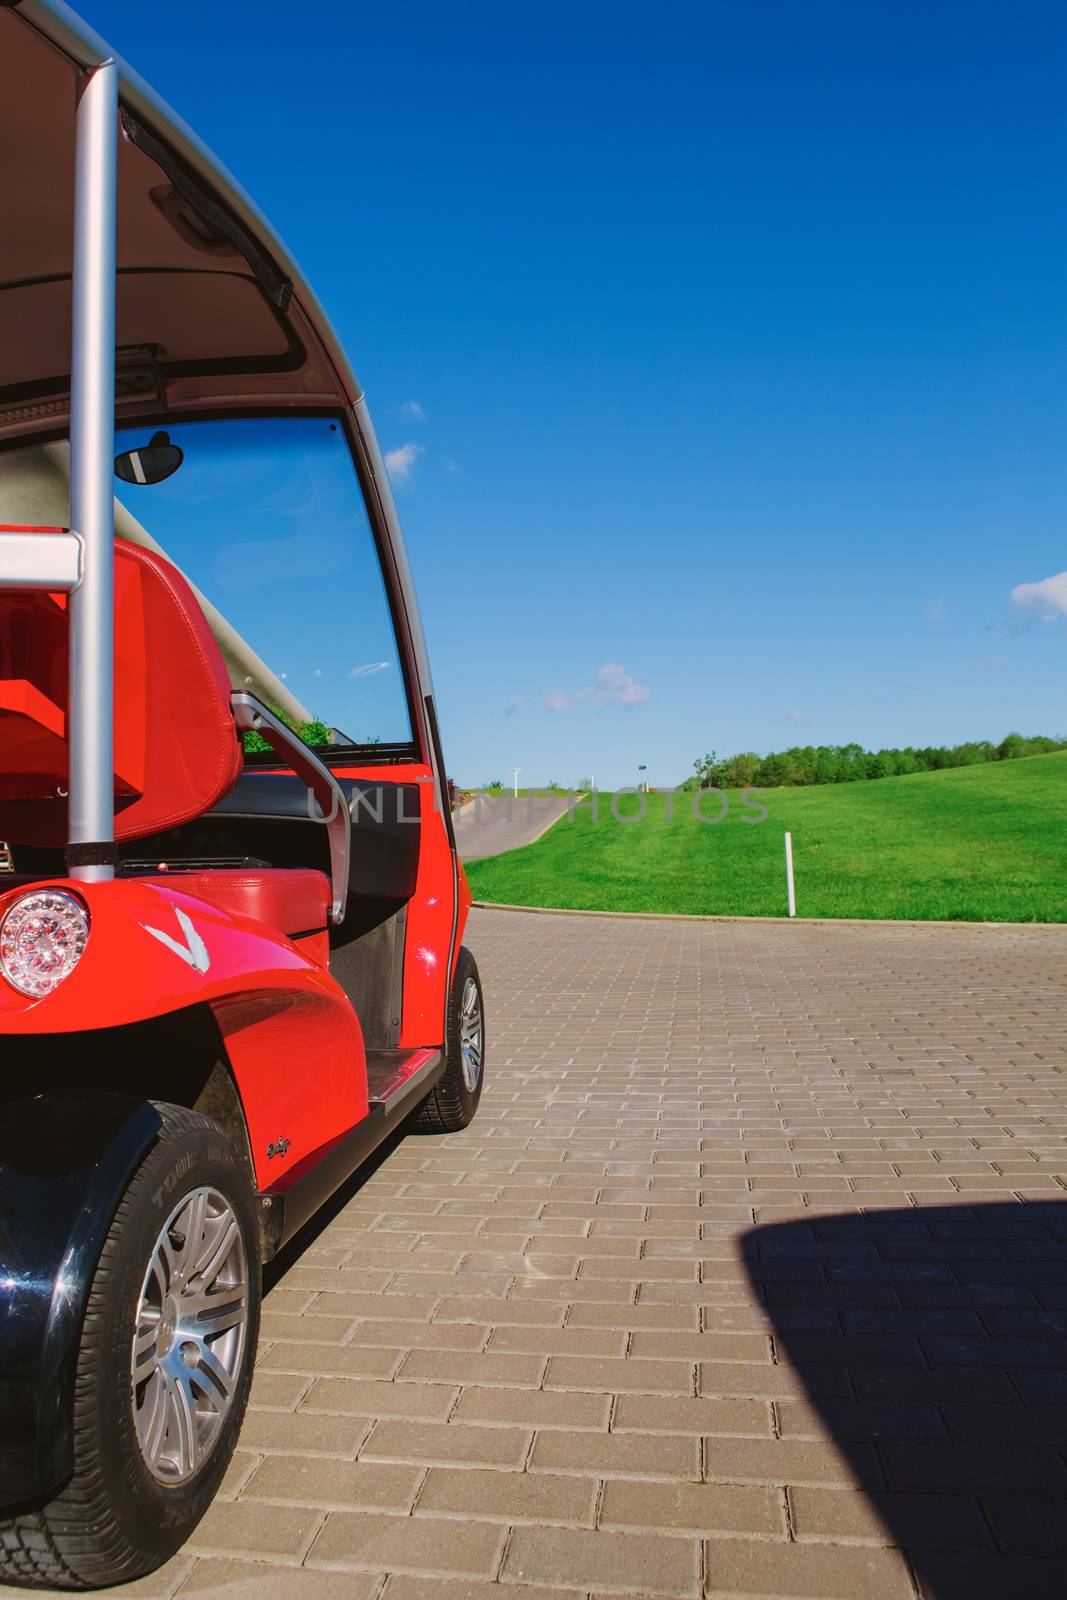 Golf car on the golf course by sarymsakov